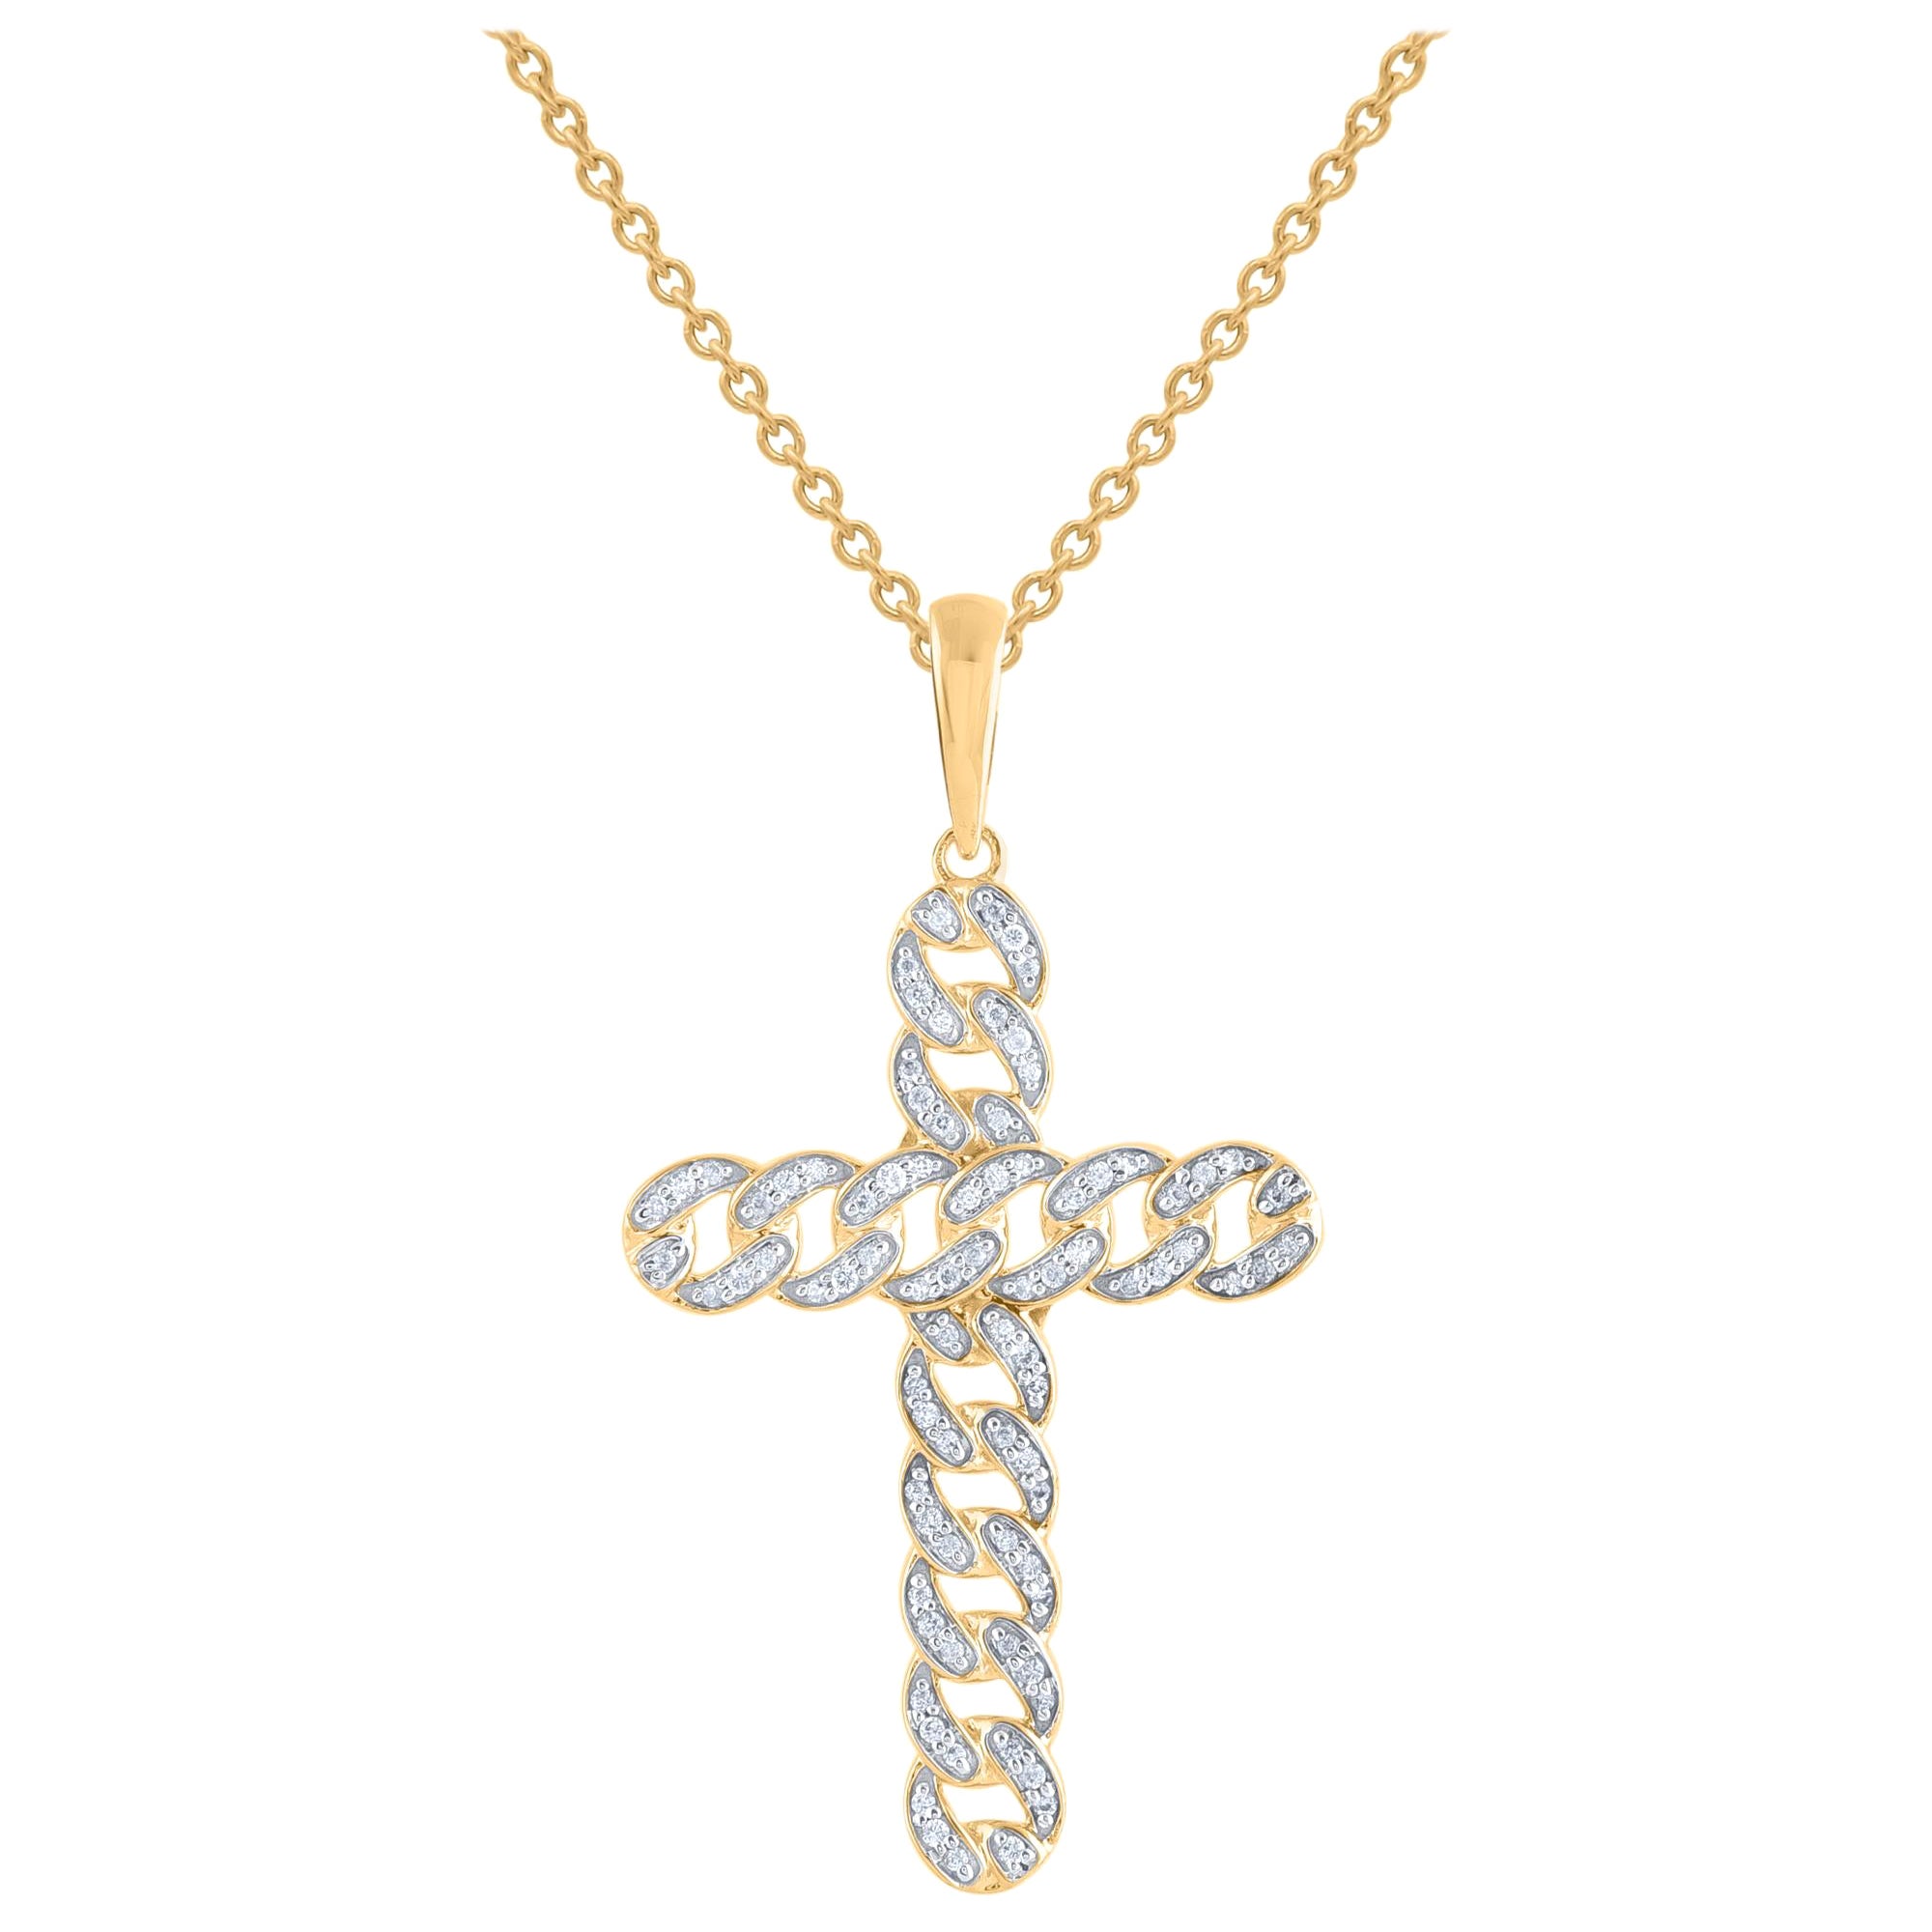 TJD 0.20 Carat Round Cut Diamond Cross Pendant Necklace in 14KT Yellow Gold